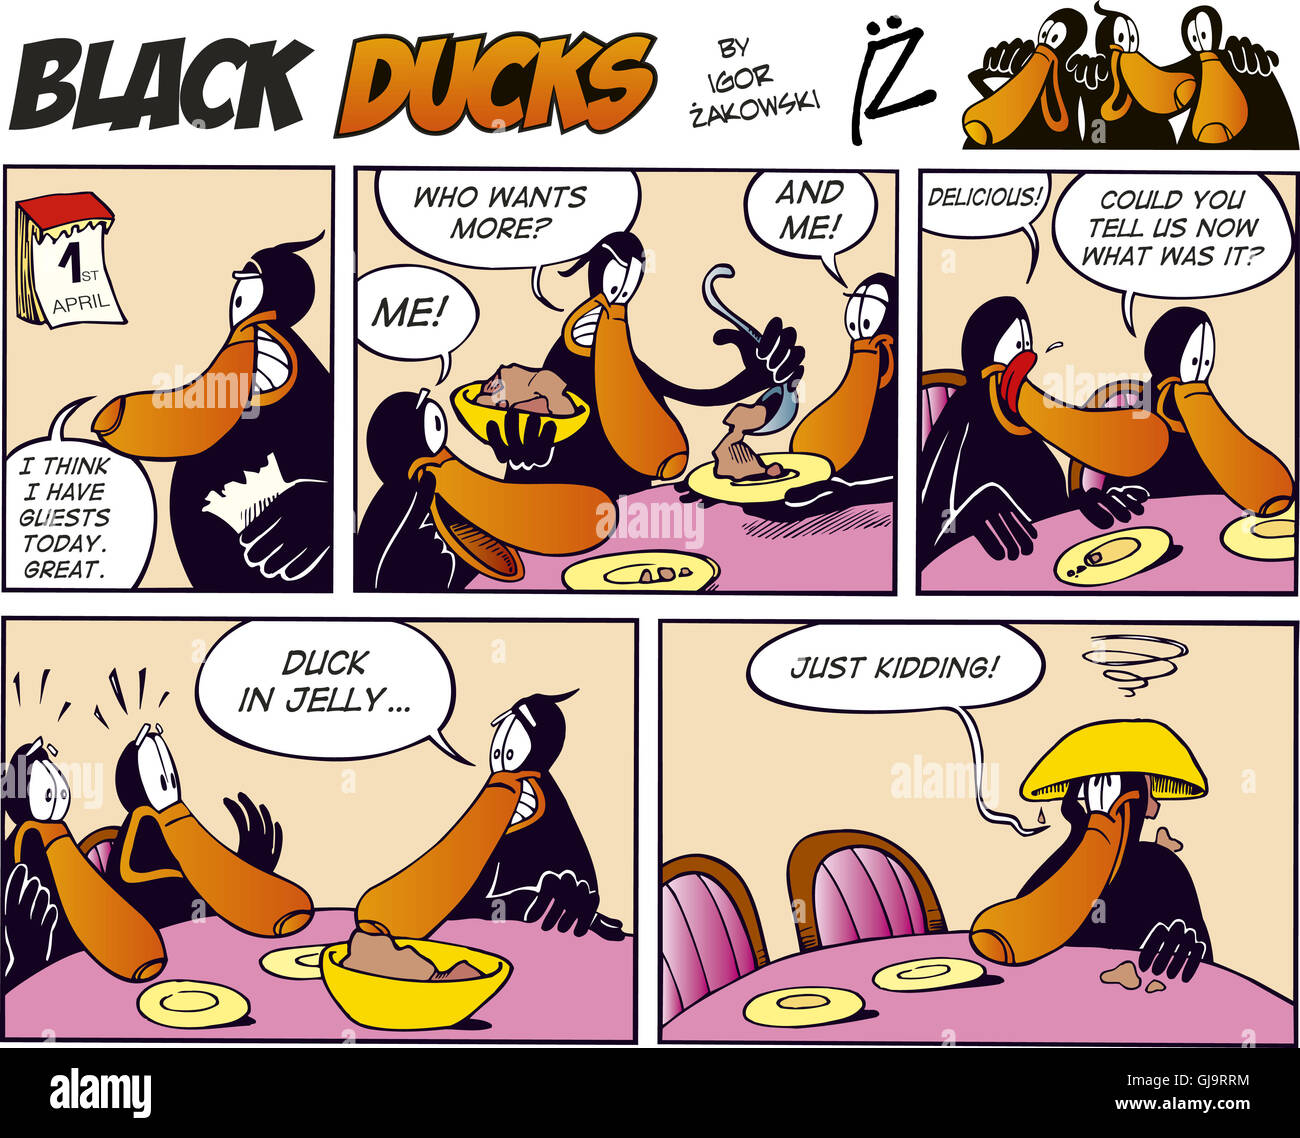 Black Ducks Comics episode 15 Stock Photo